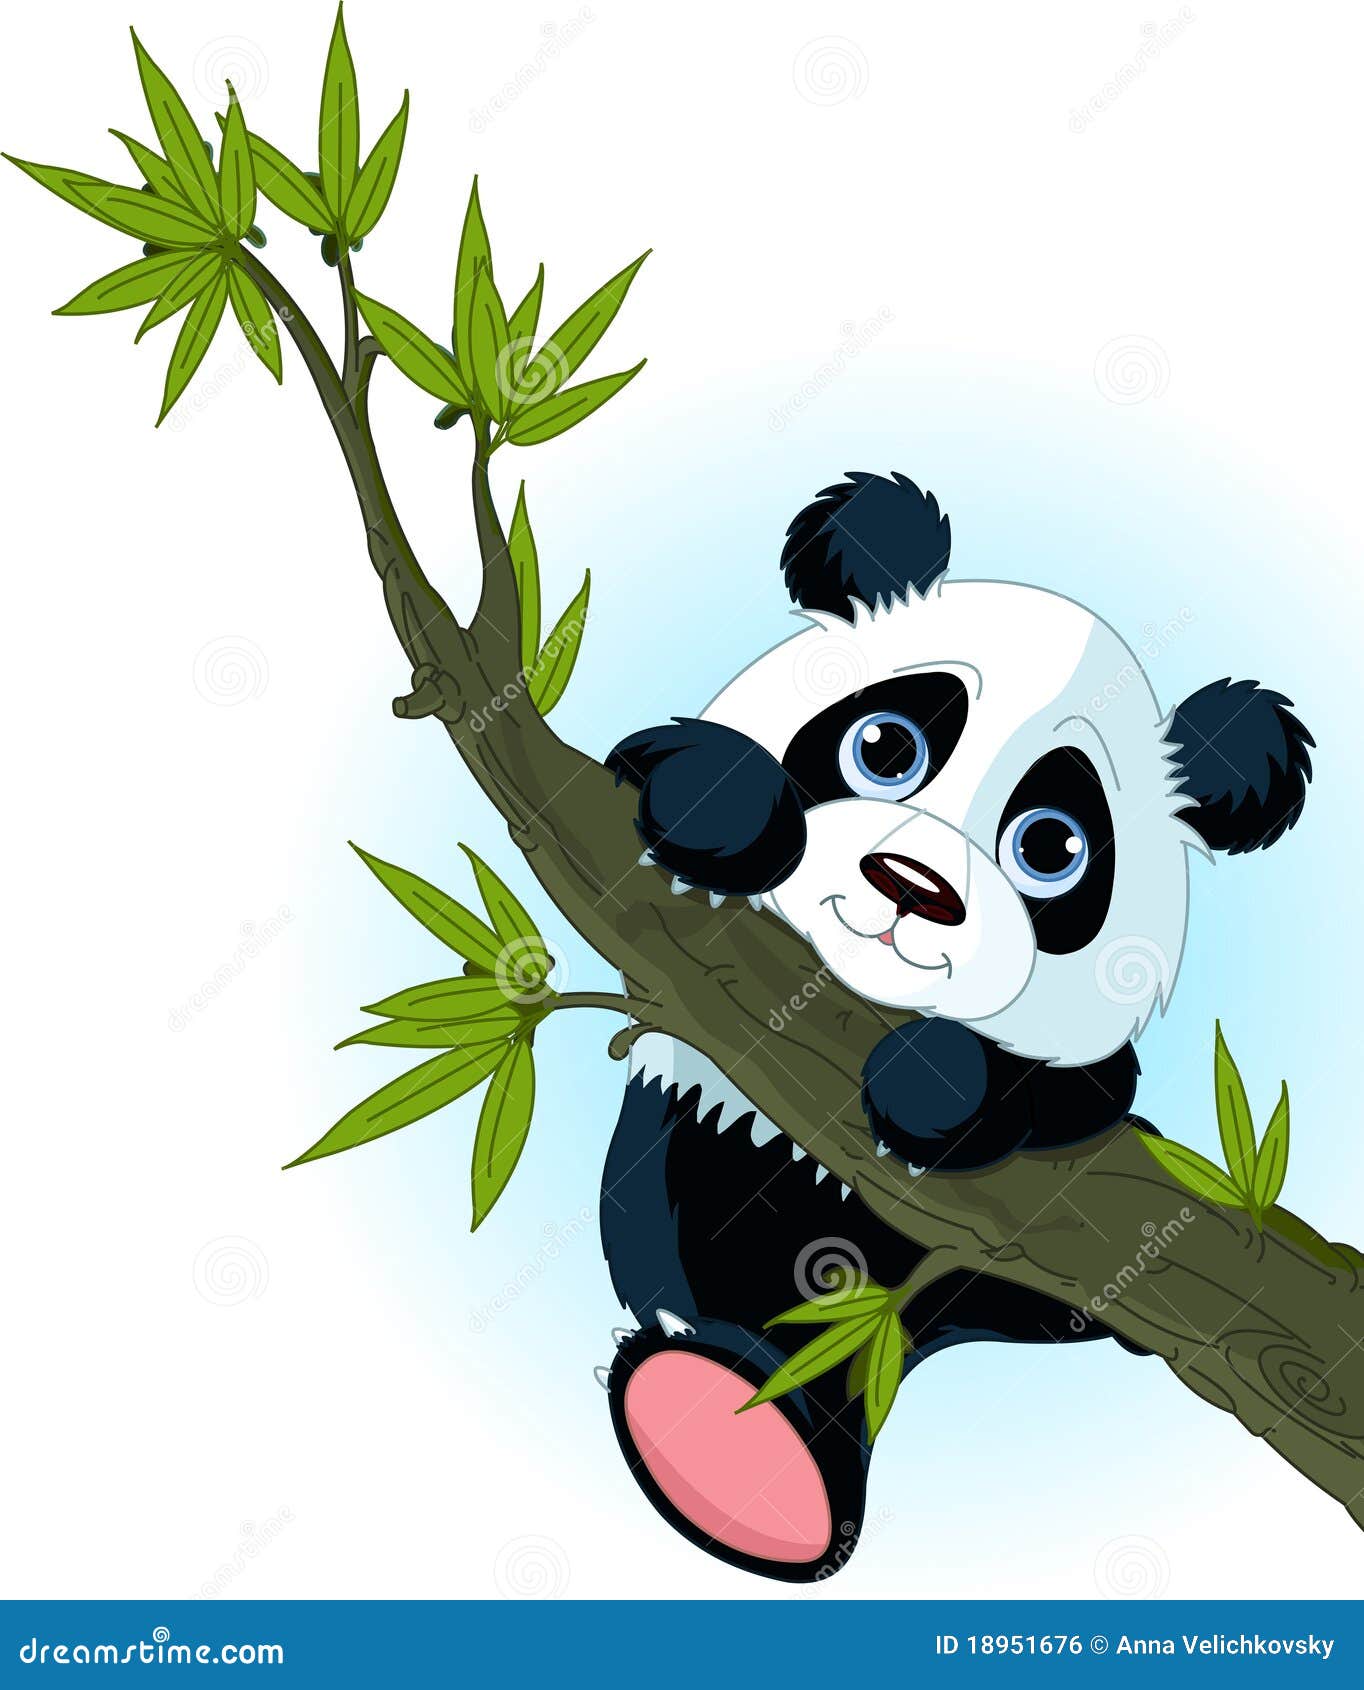 giant panda climbing tree